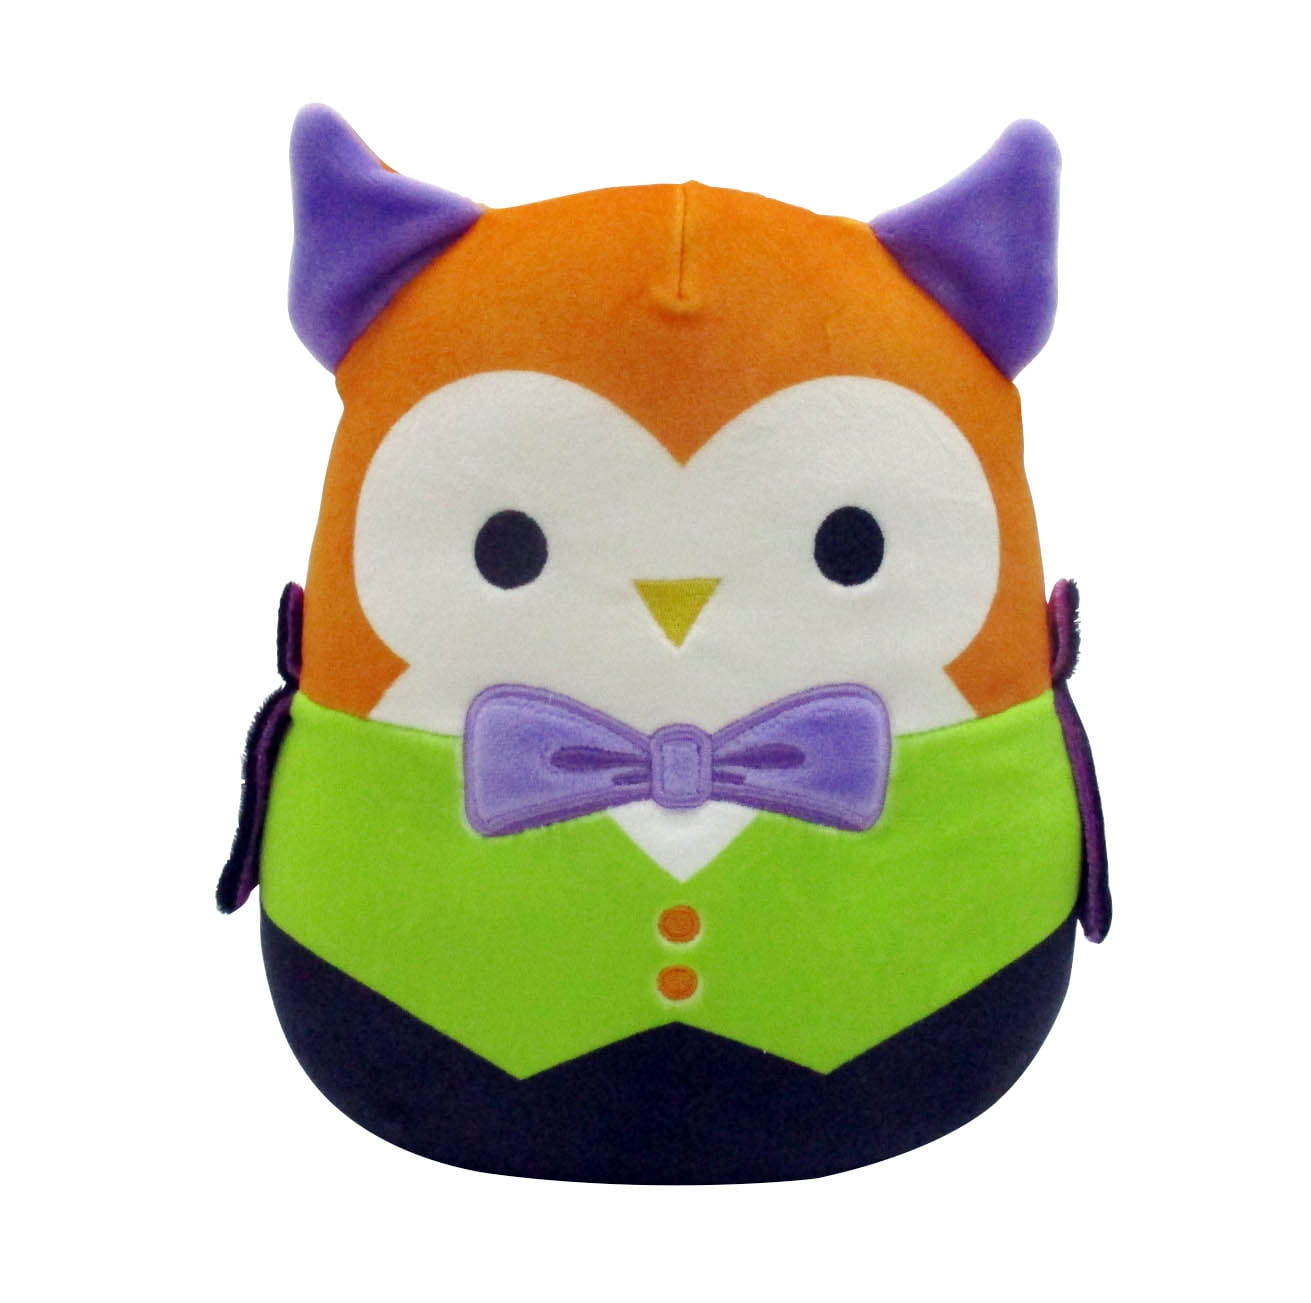 Squishmallows Official Kellytoy Plush 8" Bright Owl Dracula - Ultrasoft Stuffed Animal Plush Toy